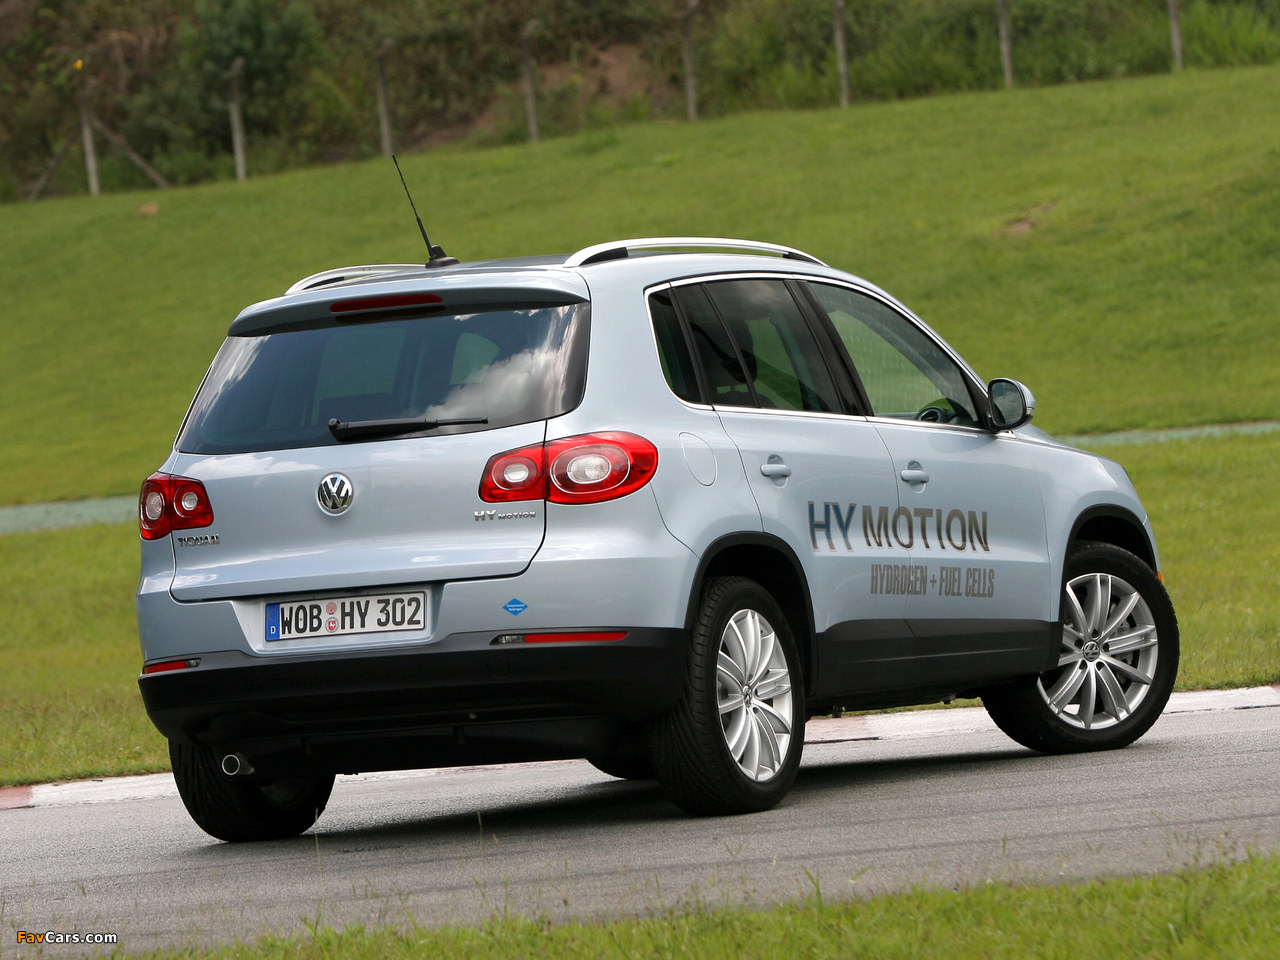 Volkswagen Tiguan HY Motion Concept 2007 pictures (1280 x 960)